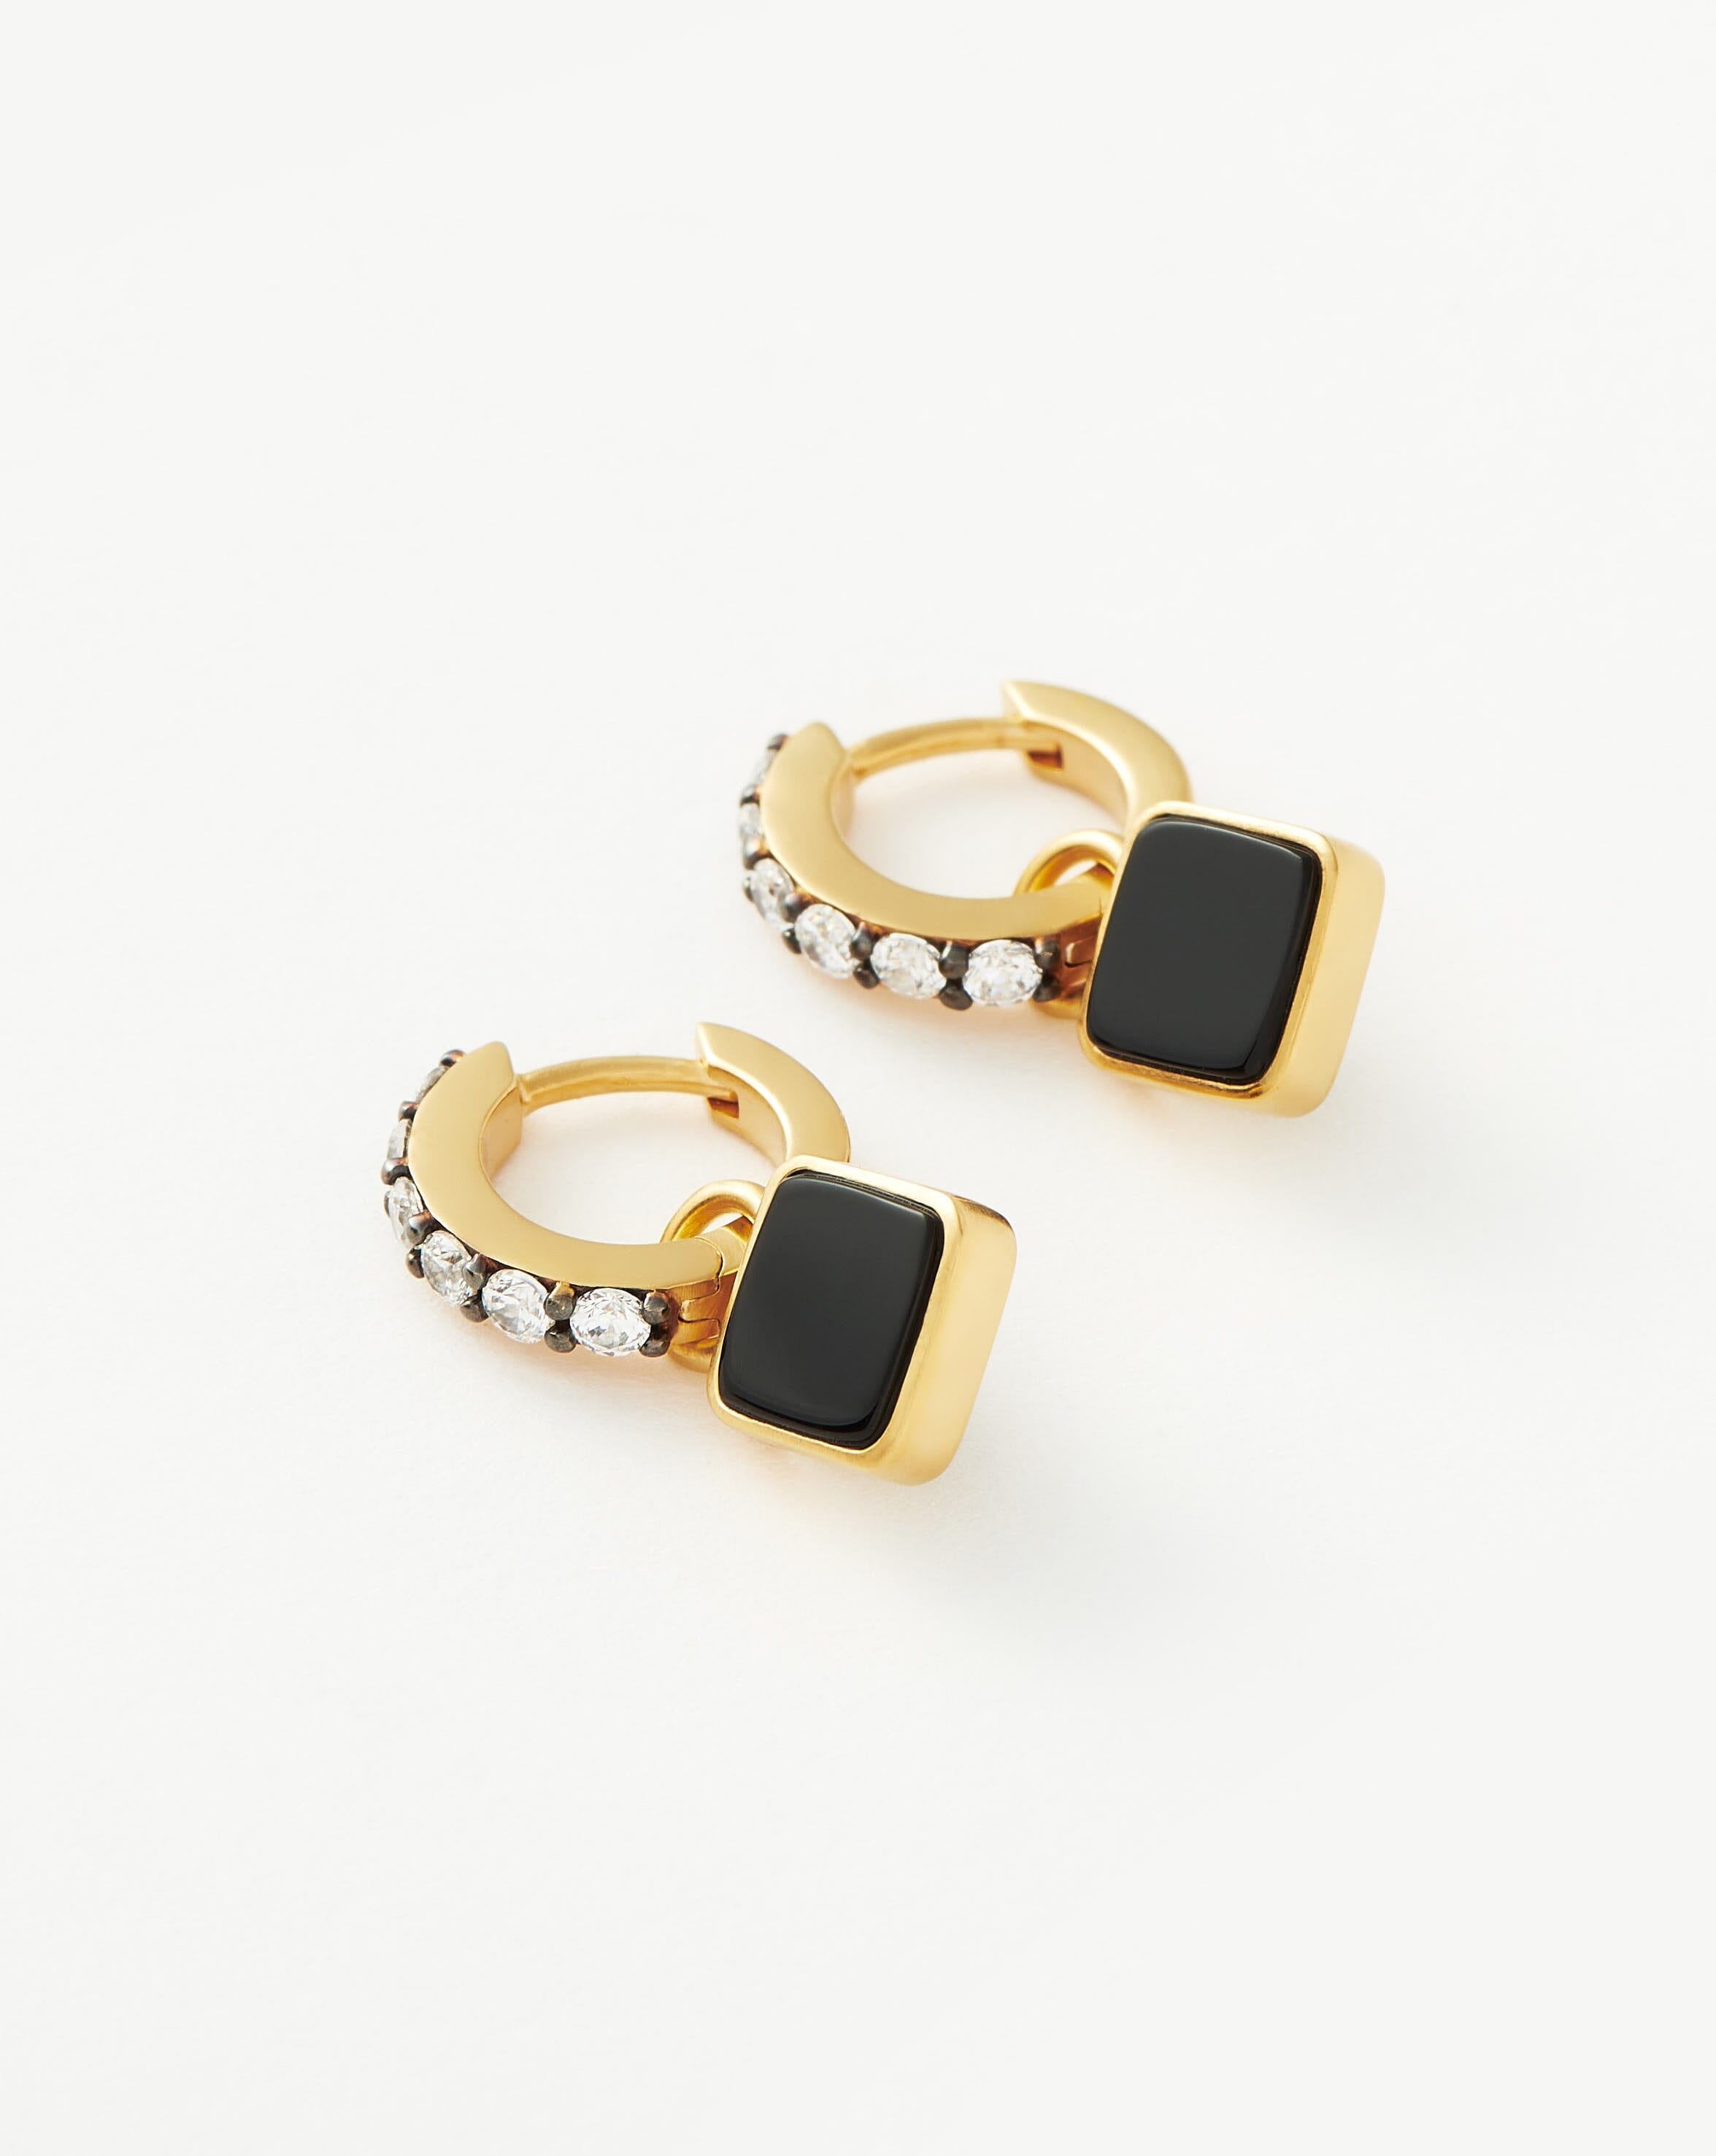 Lucy Williams Square Black Onyx Charm Mini Hoop Earrings | 18ct Gold Plated Vermeil/Black Onyx Earrings Missoma 